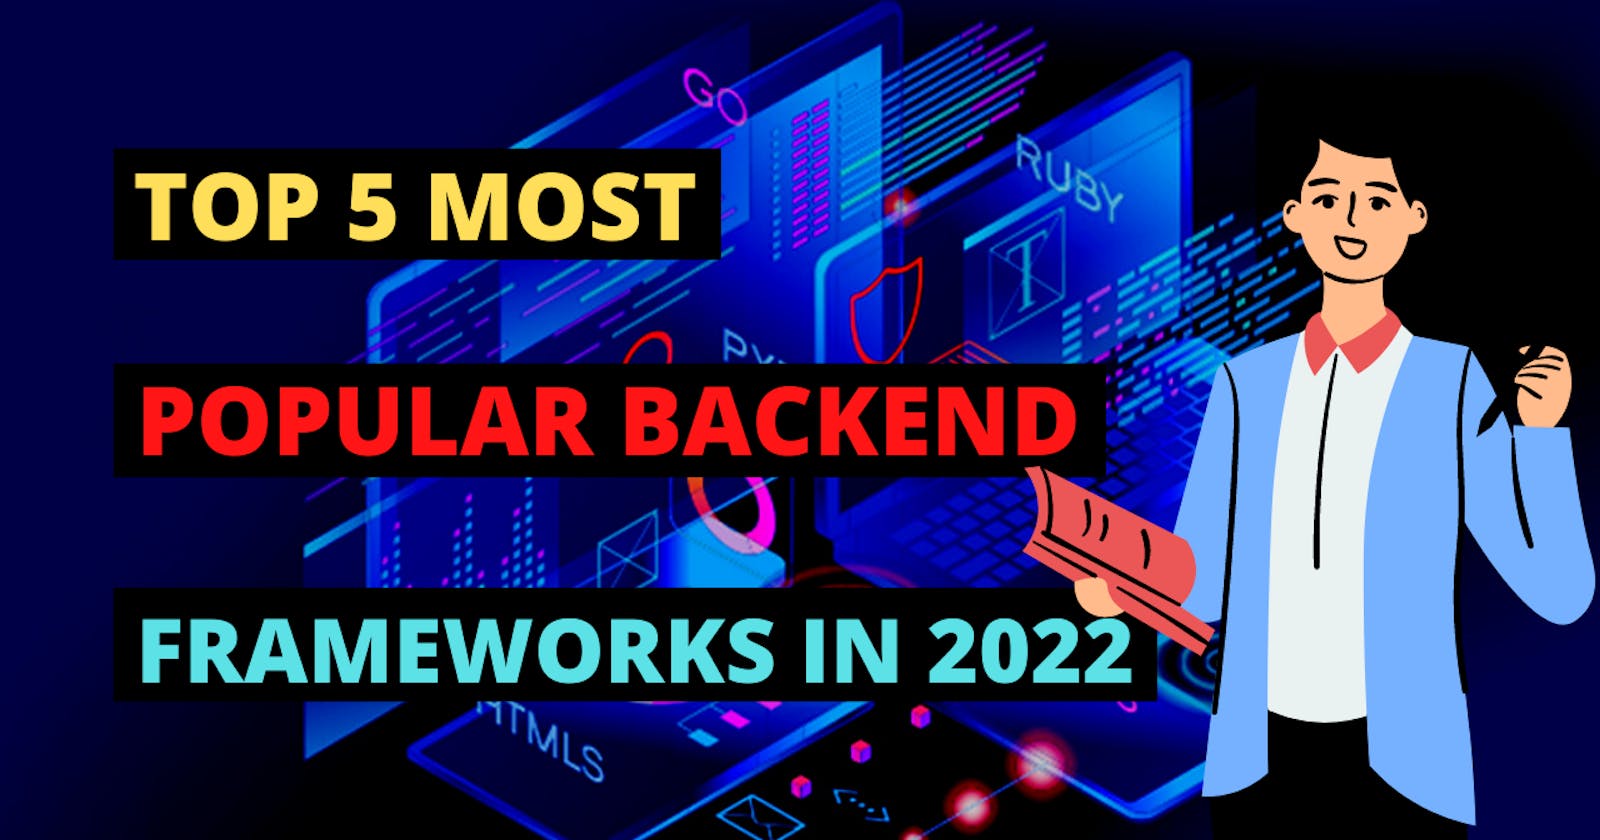 Top 5 Most Popular Backend Framework for 2022